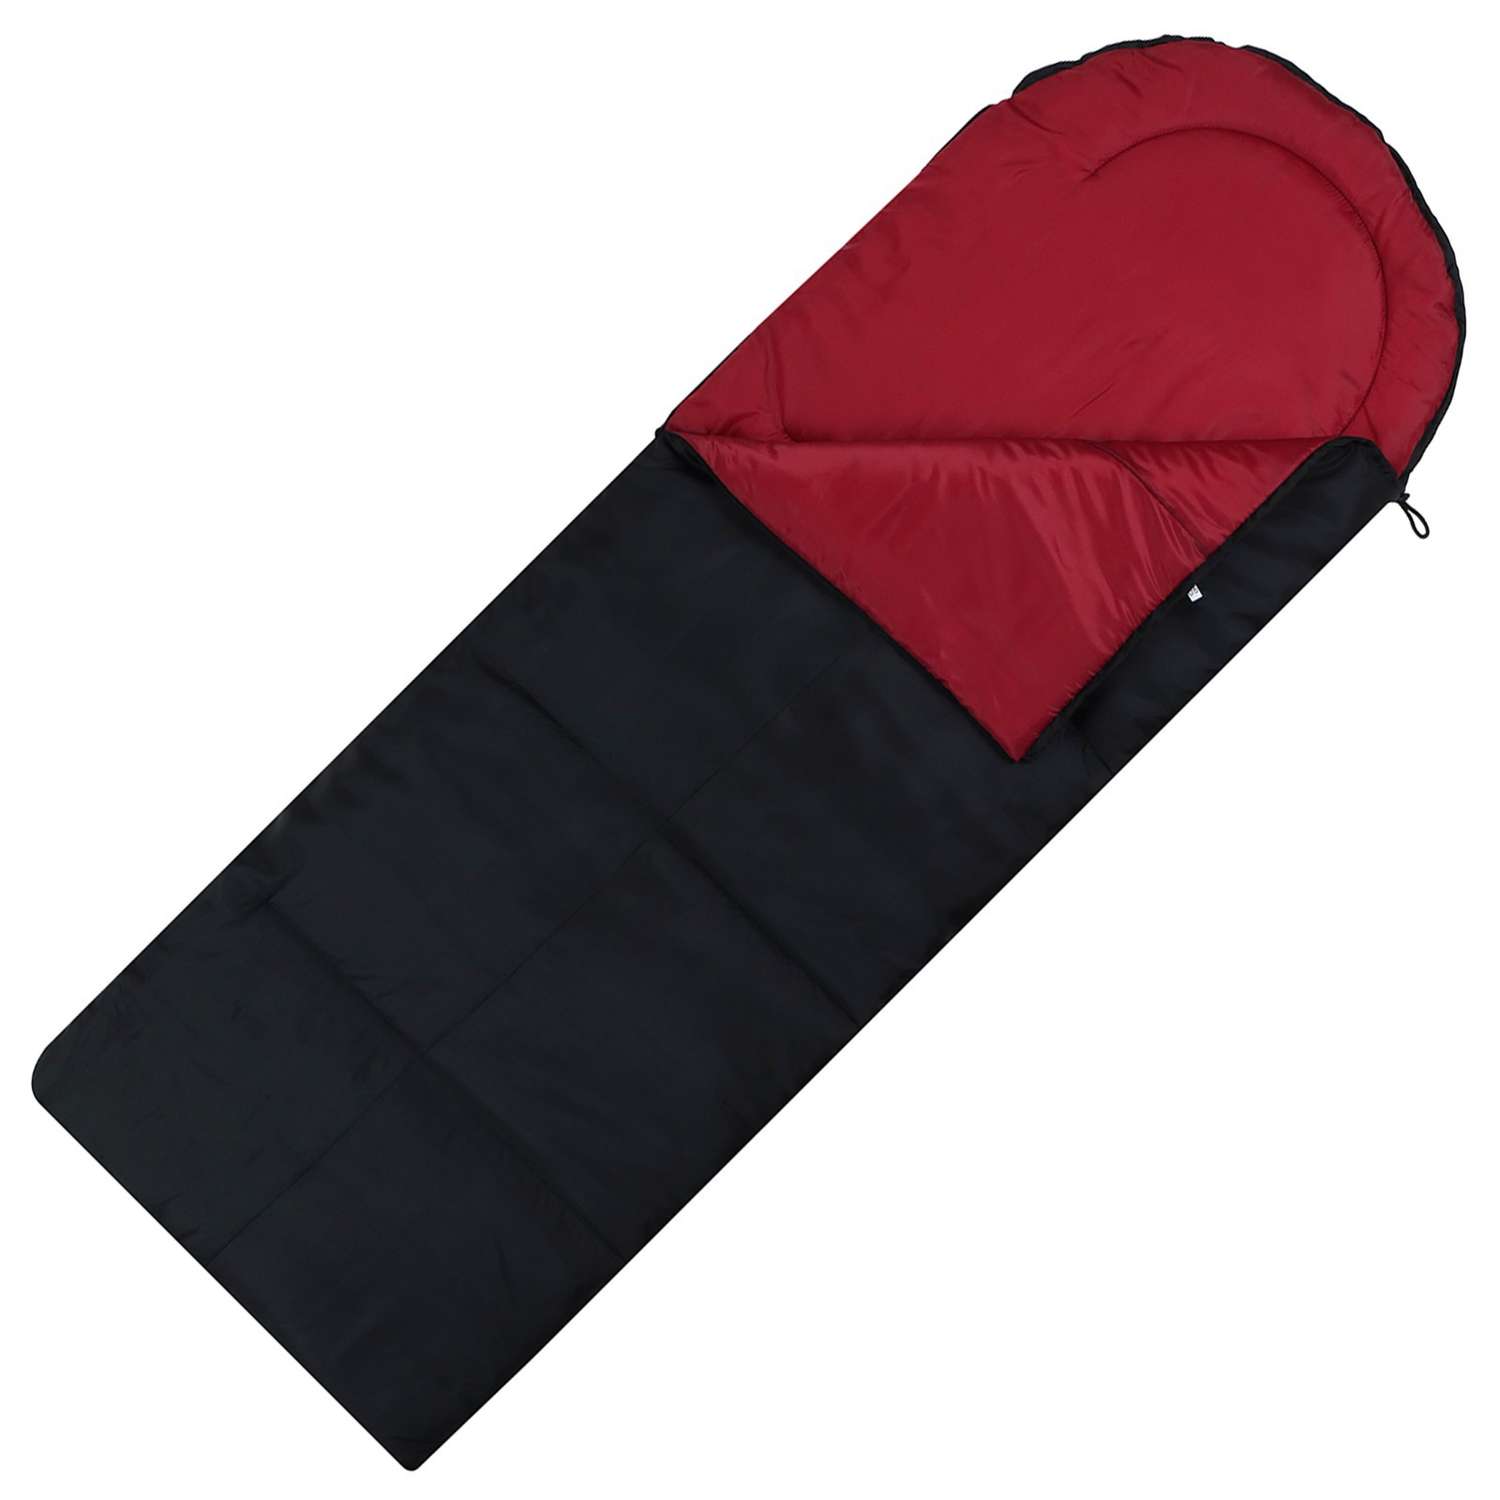 Спальник-одеяло Maclay с подголовником 235х80 см до -15°С - фото 3